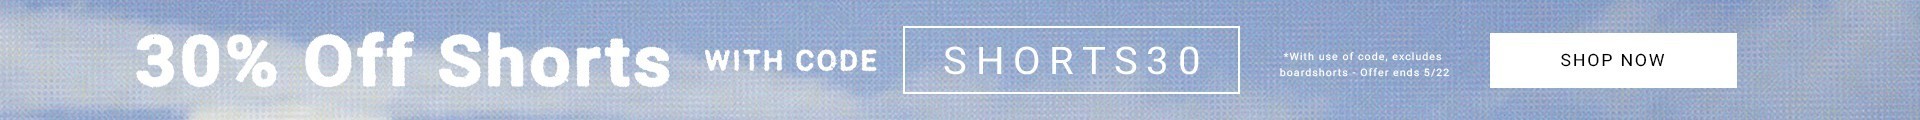 Men's Shorts Collection Promotion